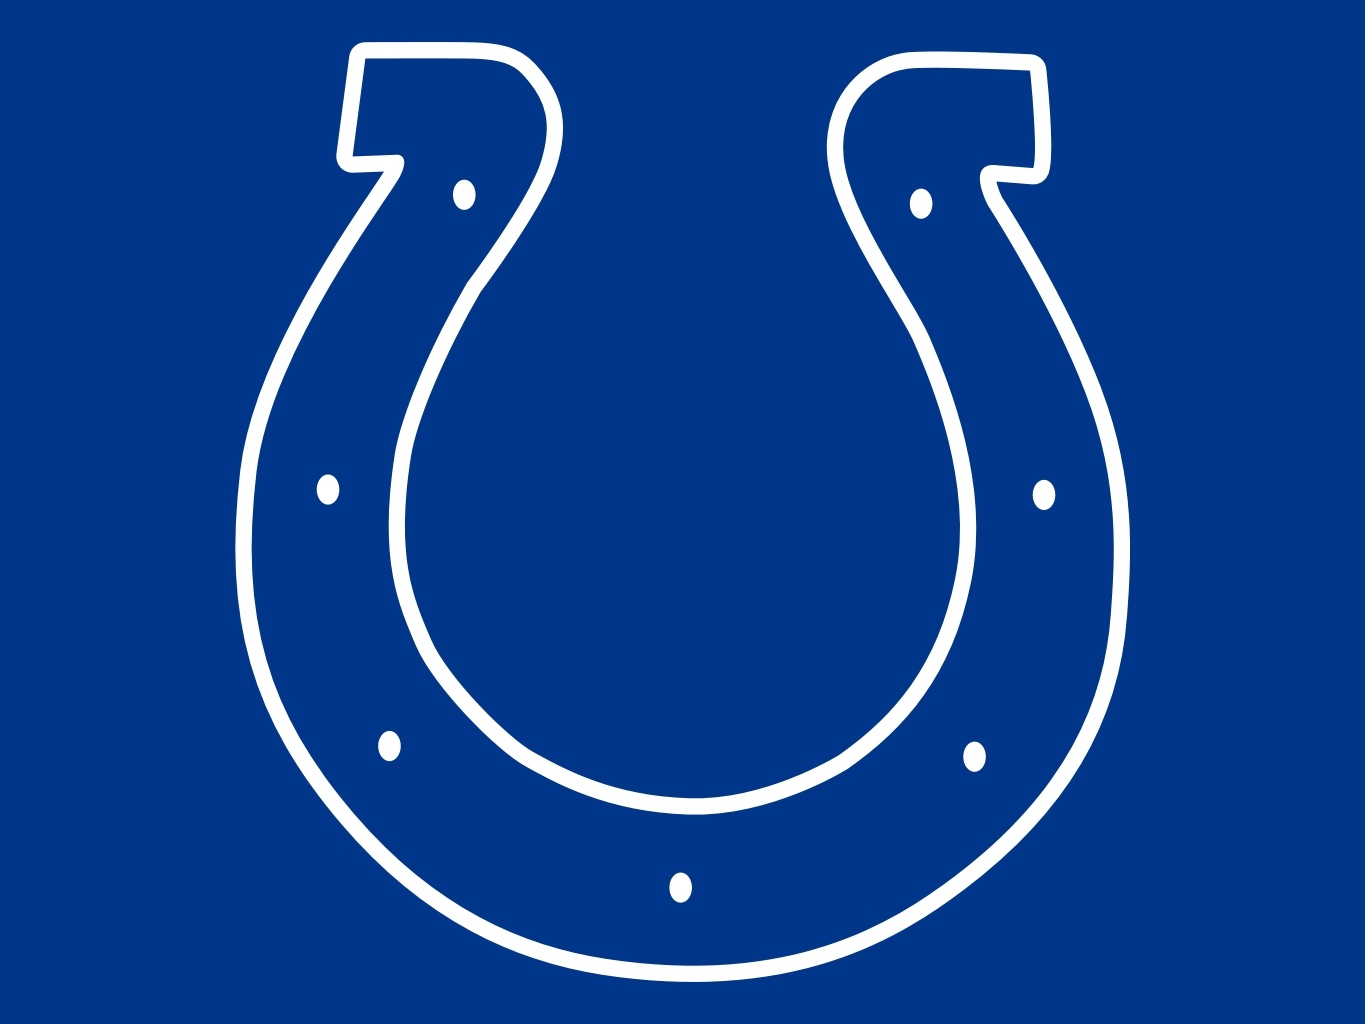 Indianapolis_Colts.jpg